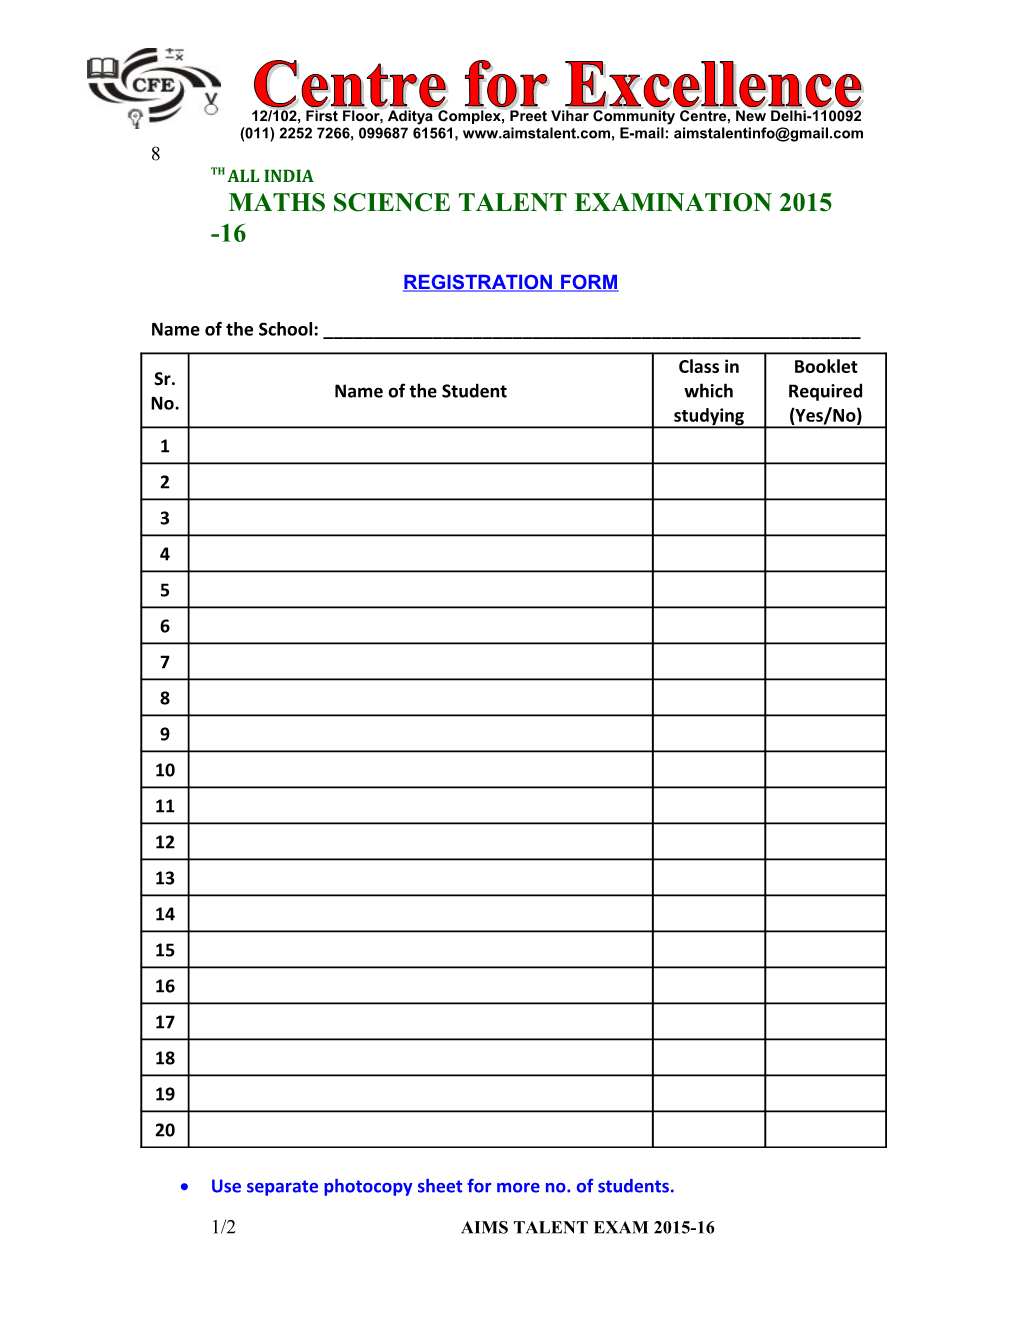 Maths Science Talent Examination 2015 -16